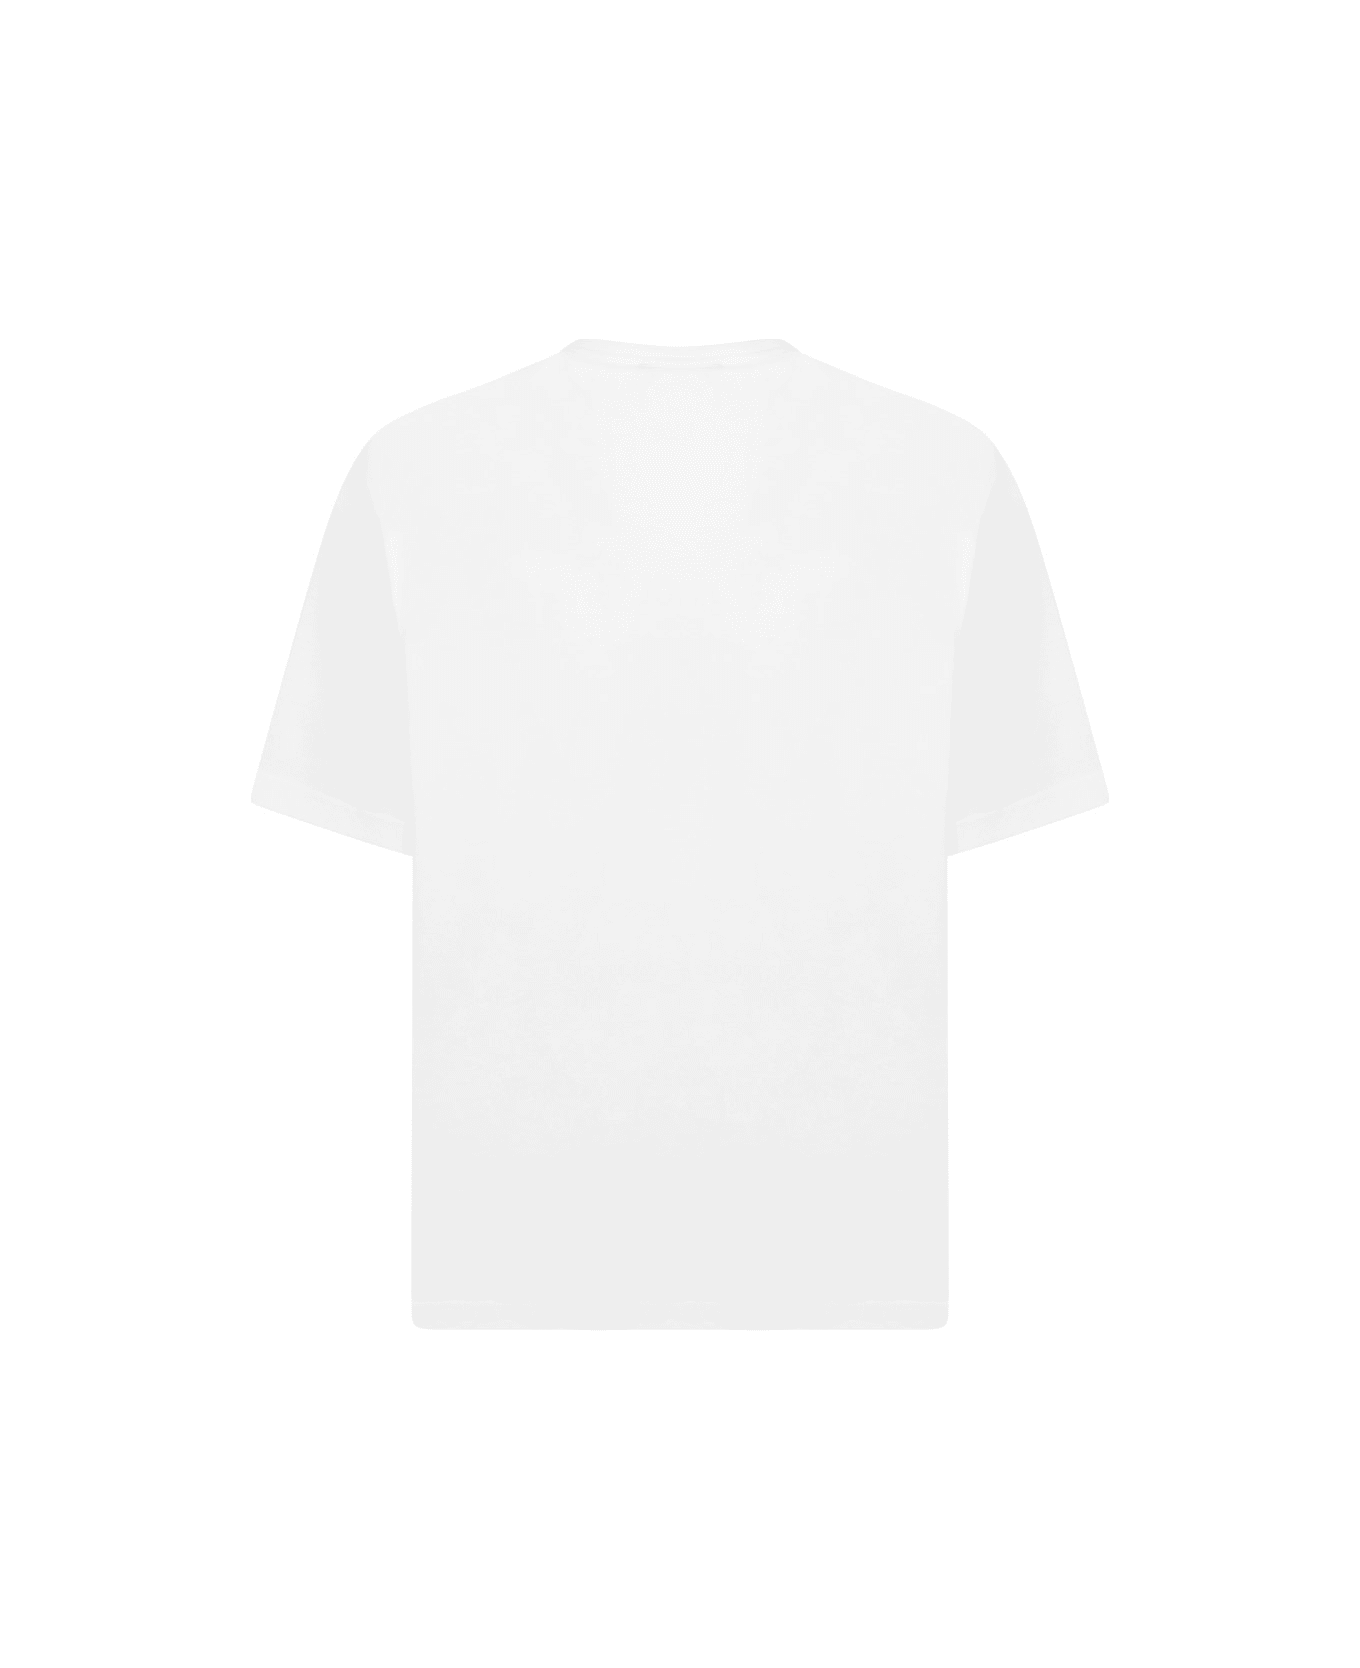 Acne Studios T-shirt - Optic white